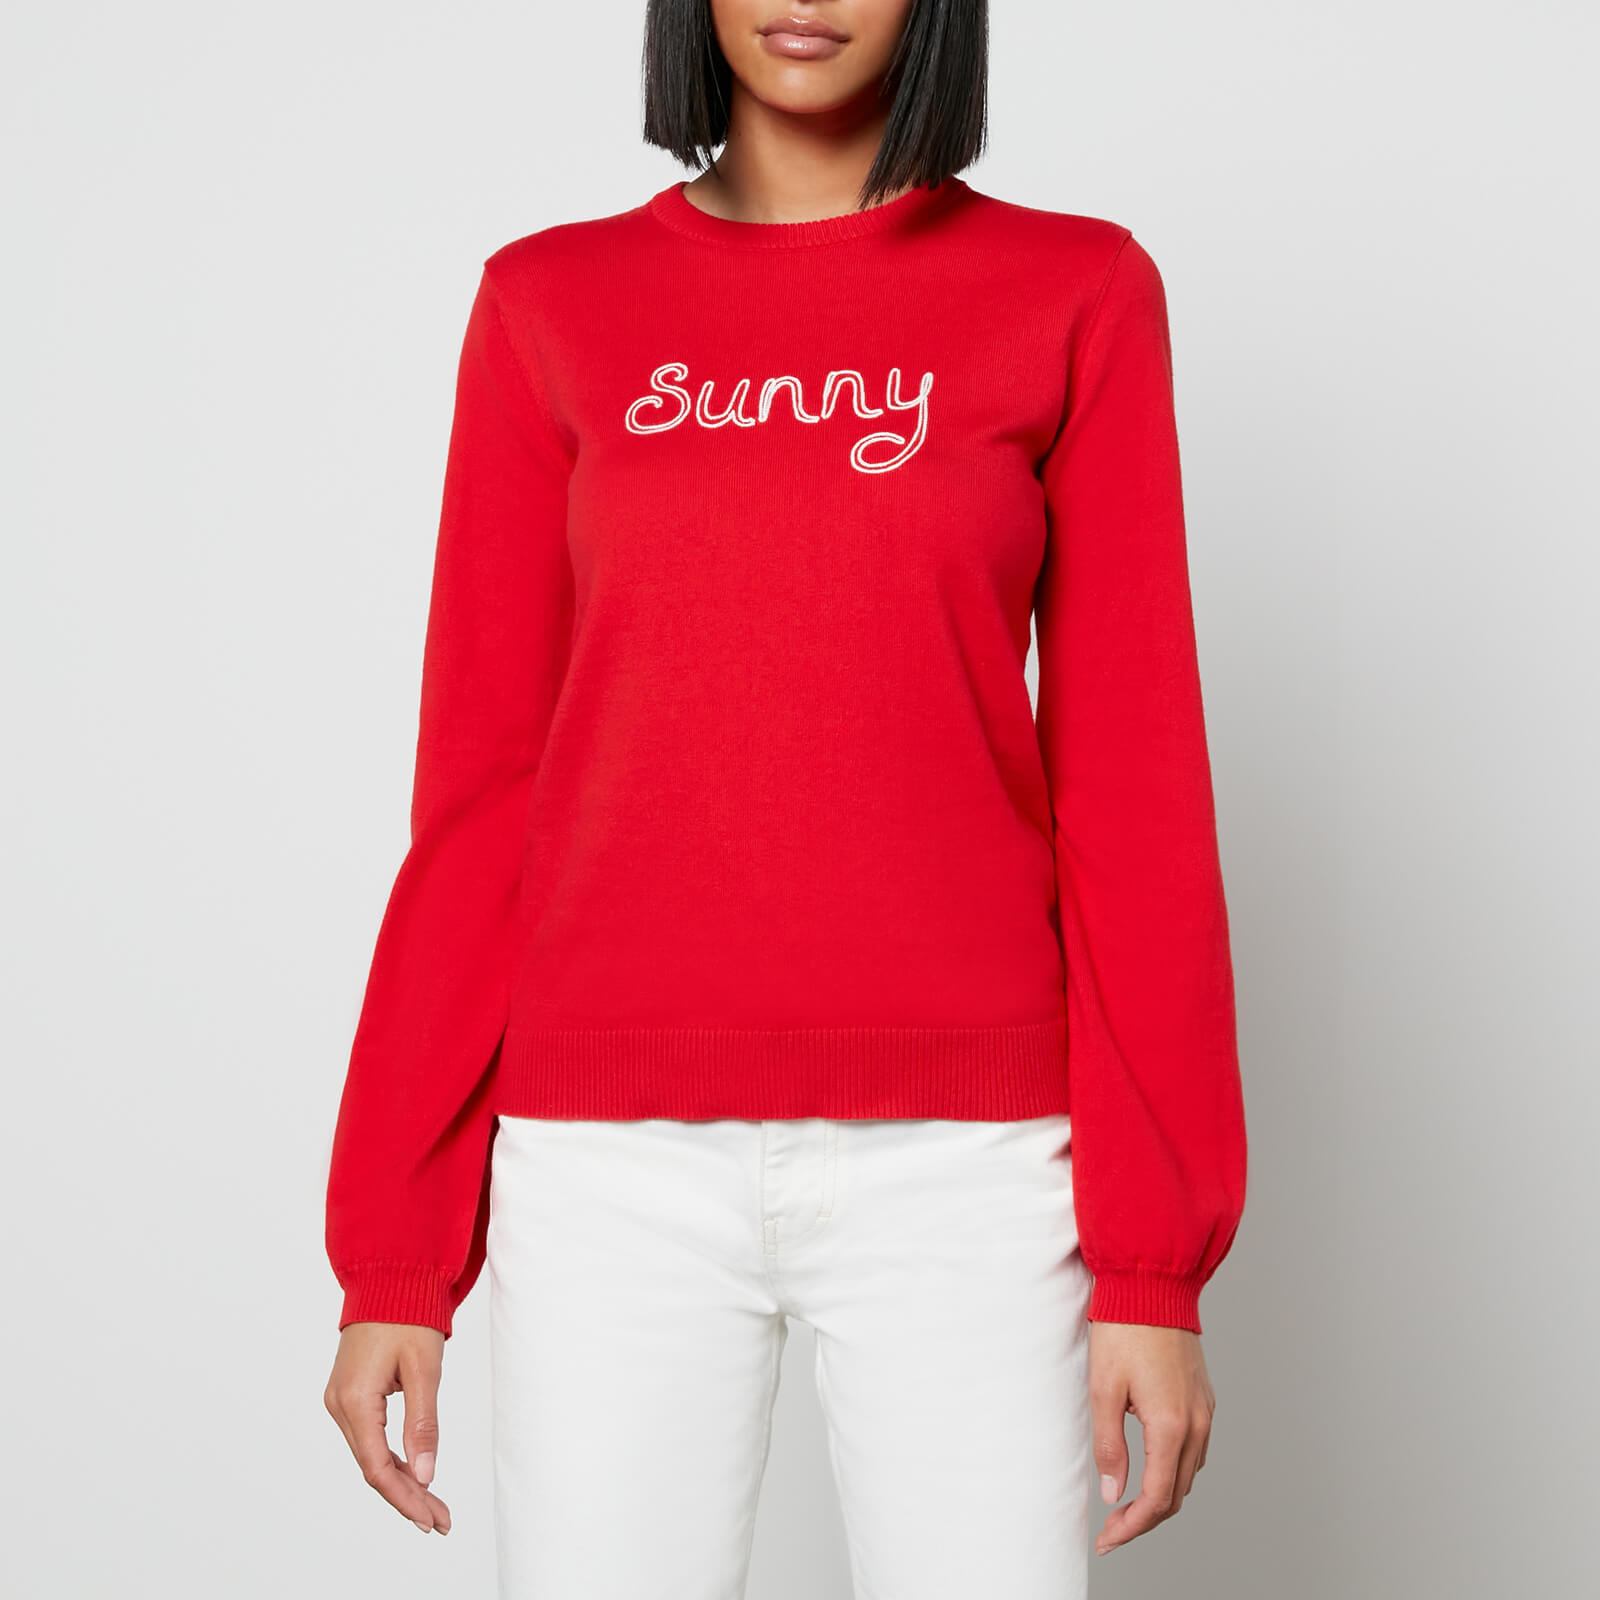 Bella Freud Women's Sunny Jumper Cotton Cashmere - Bright Red - XS